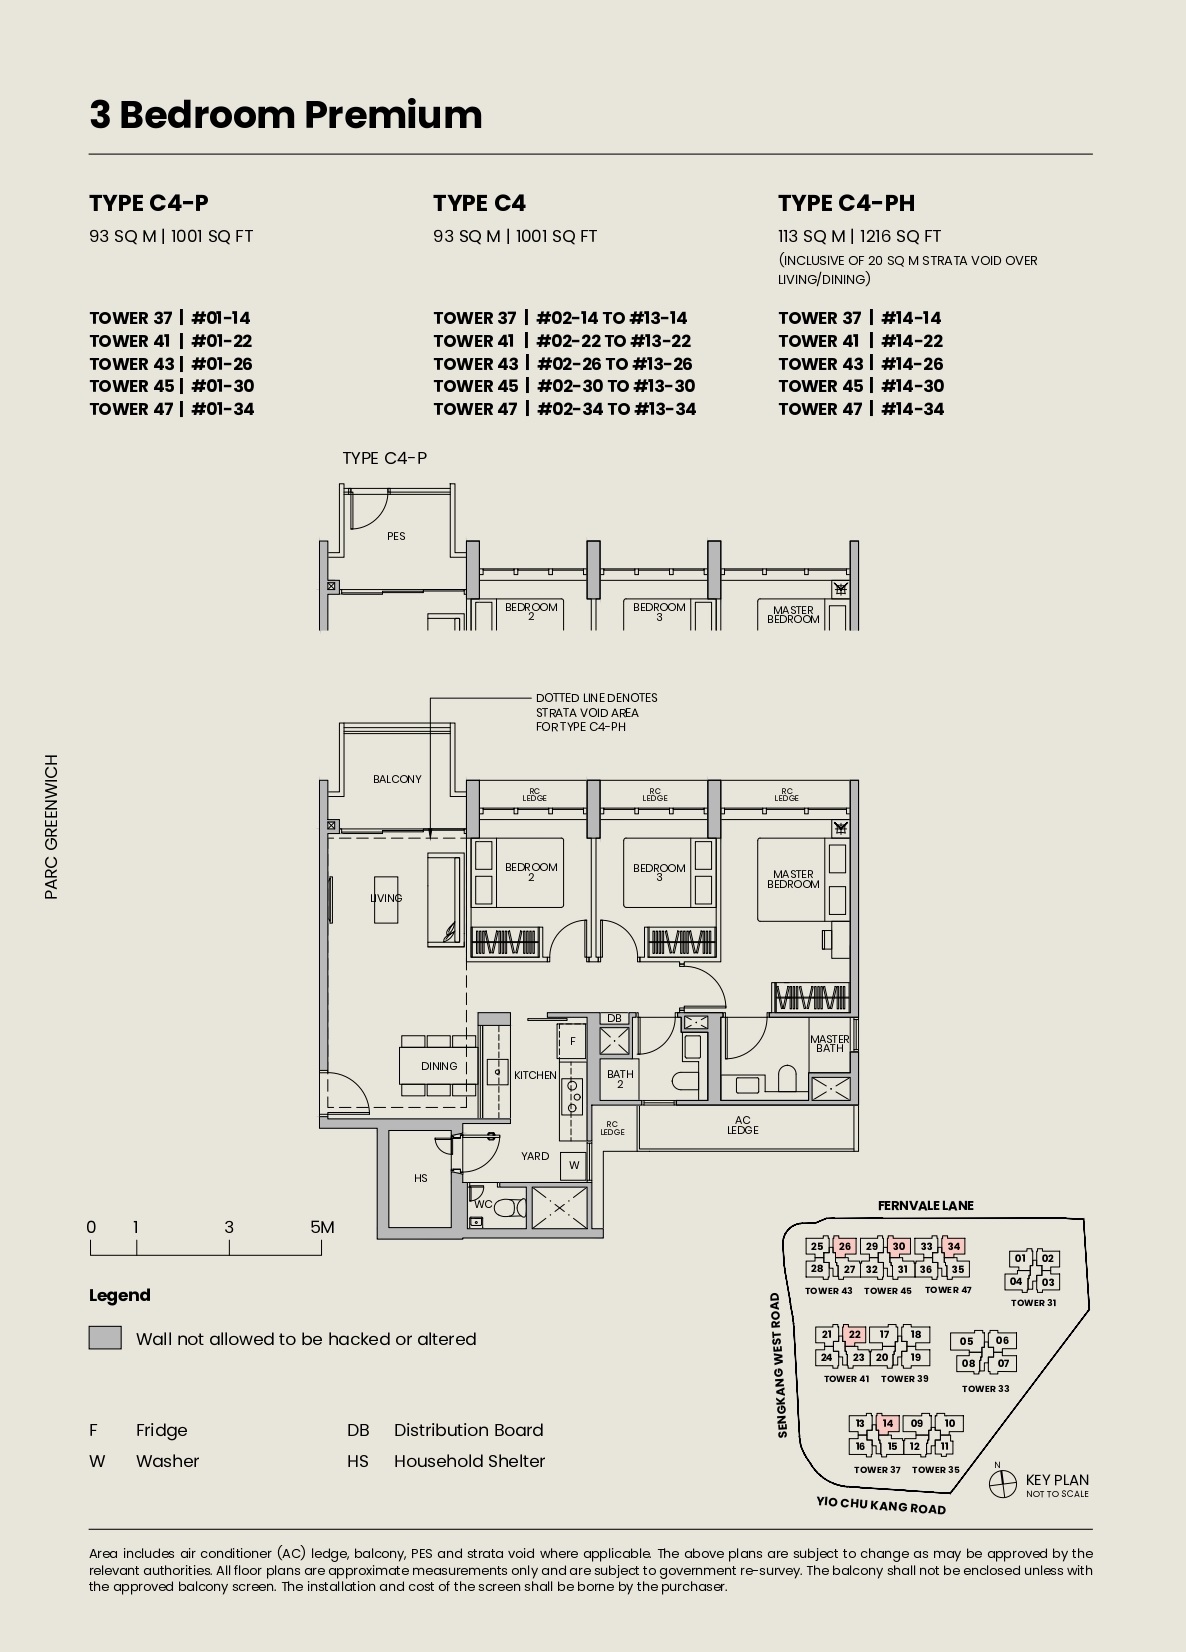 Parc Greenwich 3 Bedroom Premium Type C4-P, Type C4, Type C4-PH Floor Plans